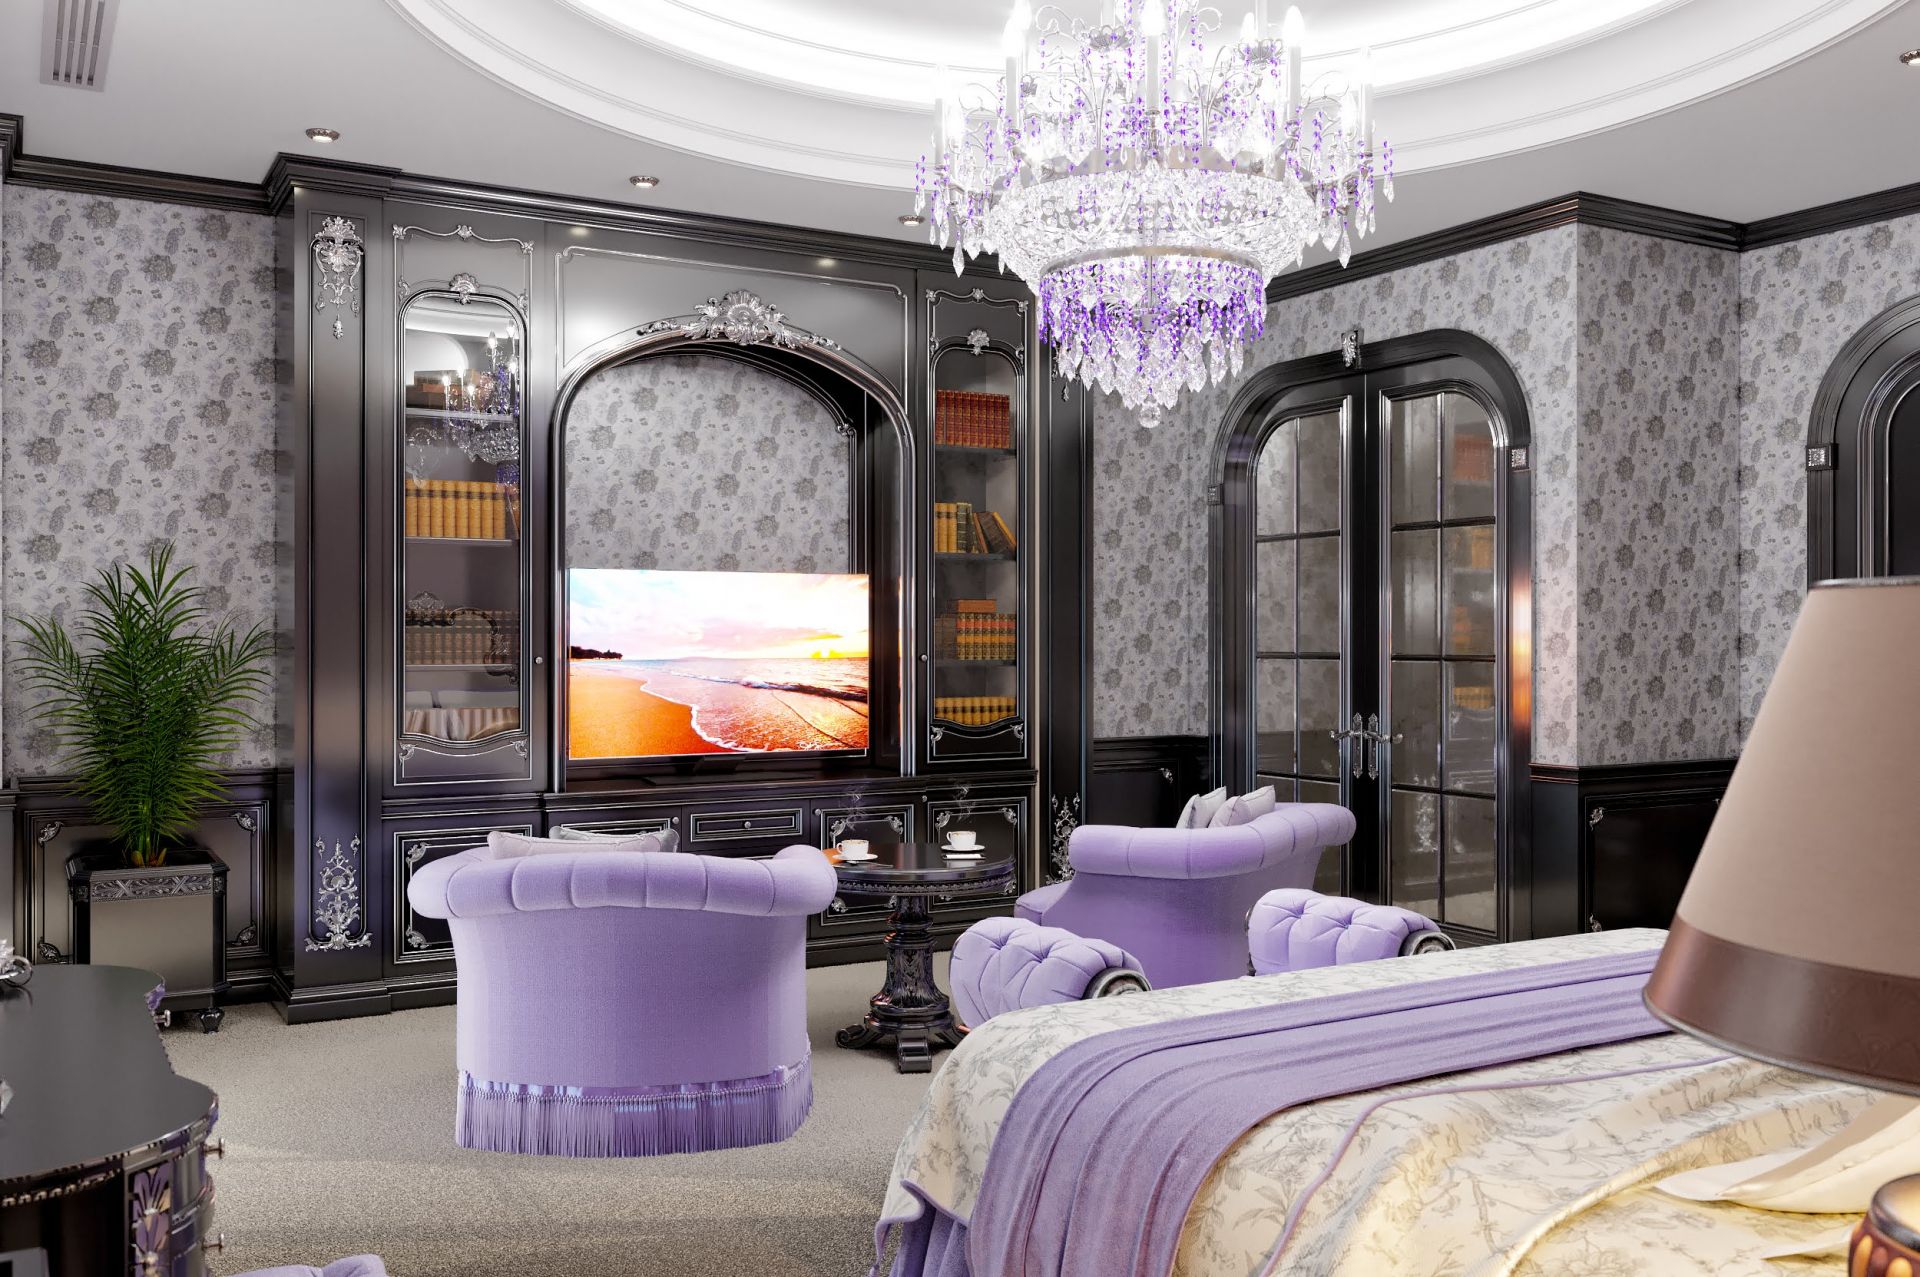 Luxurious bedroom interior